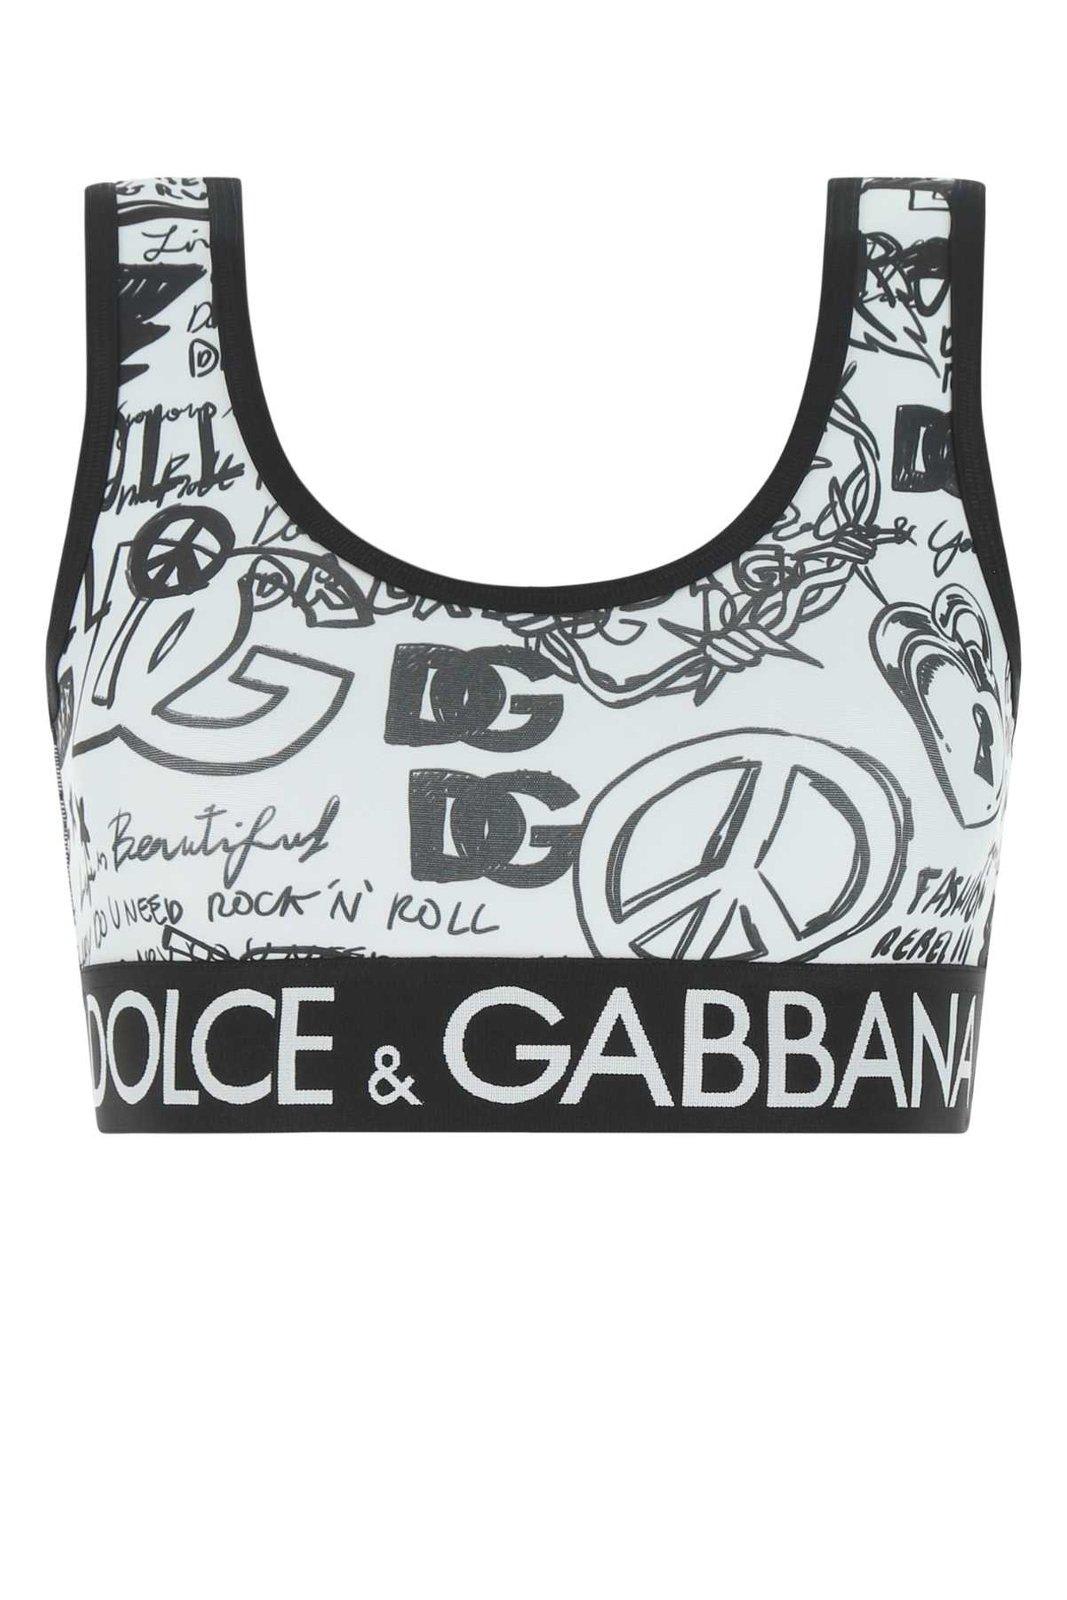 Dolce & Gabbana Graffiti Printed Sleeveless Cropped Top